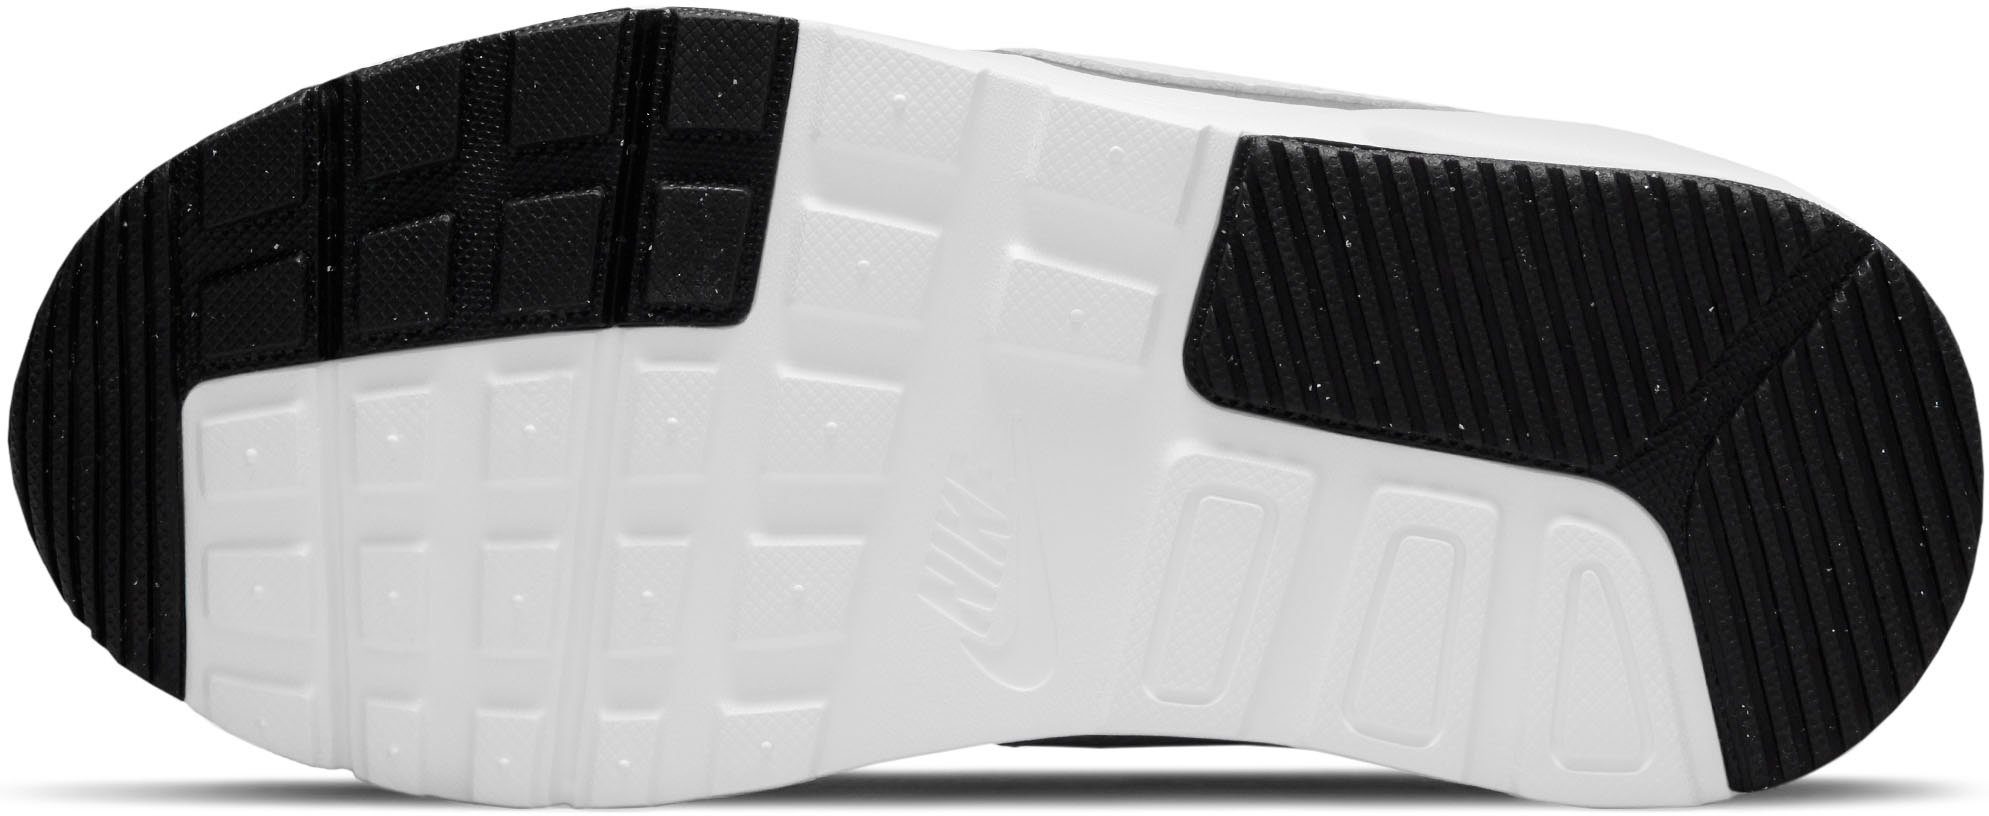 Nike Sportswear AIR SC Sneaker (PS) schwarz-weiß MAX